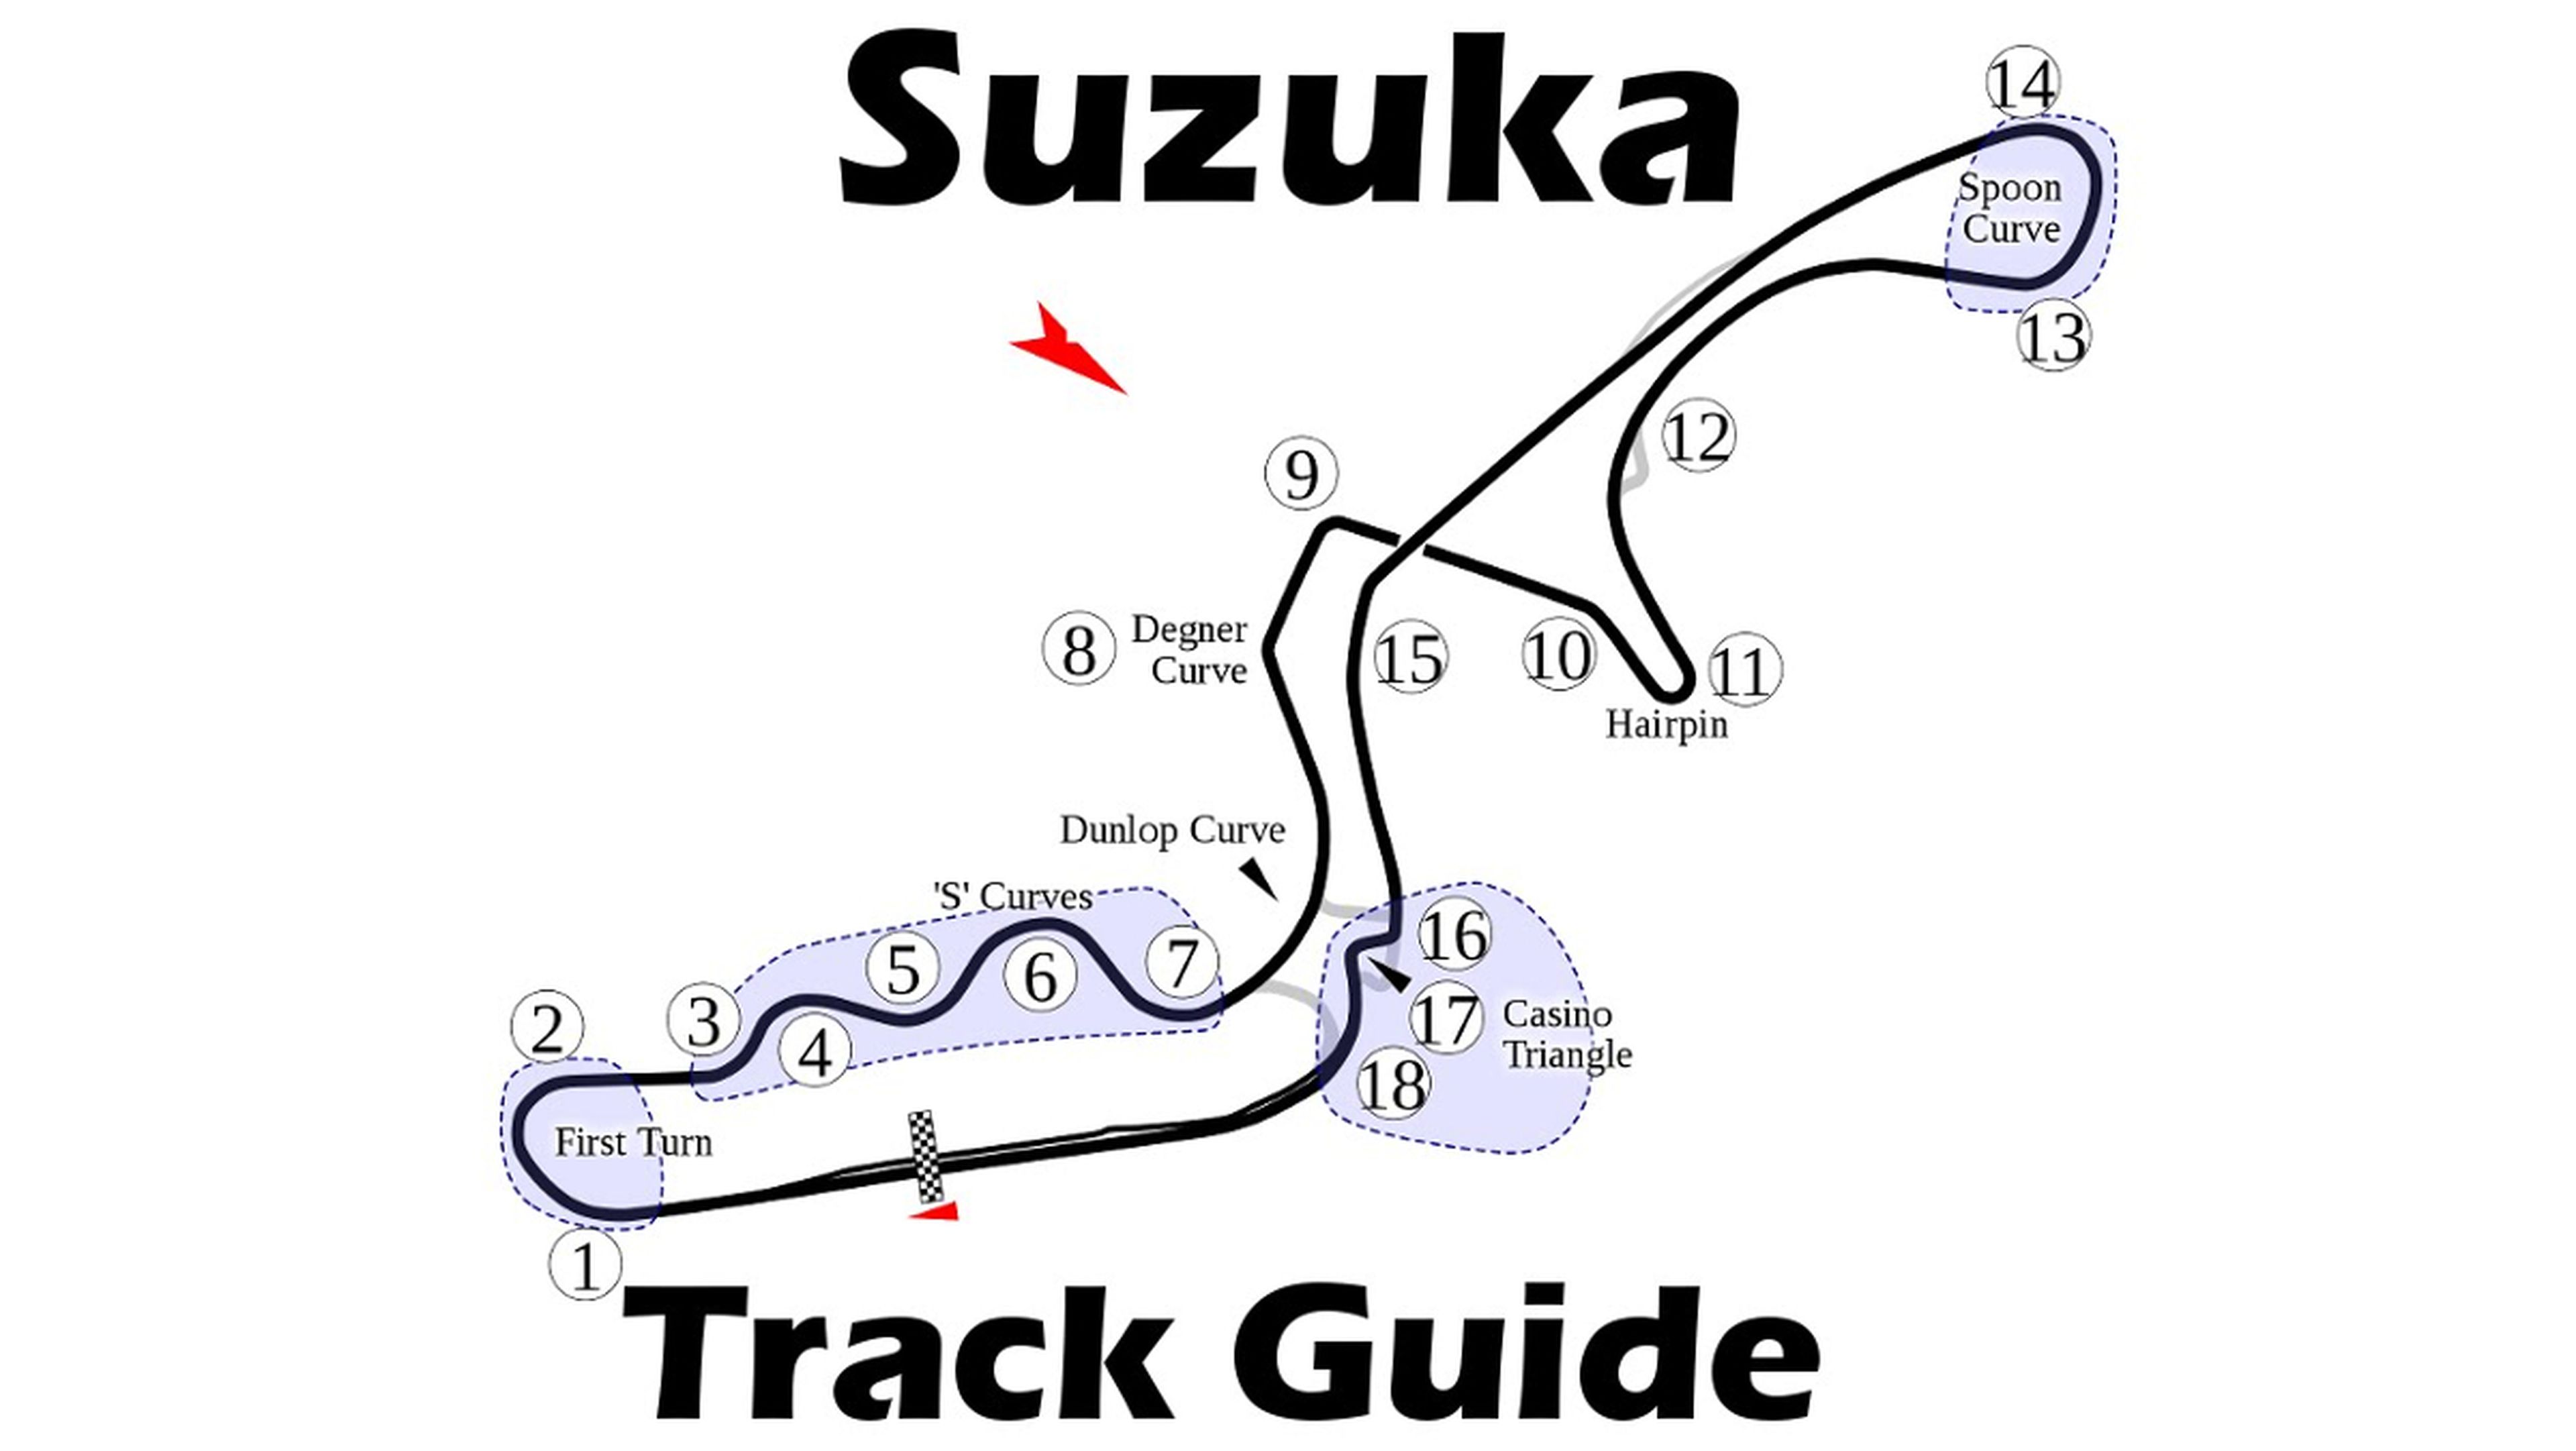 Suzuka Track